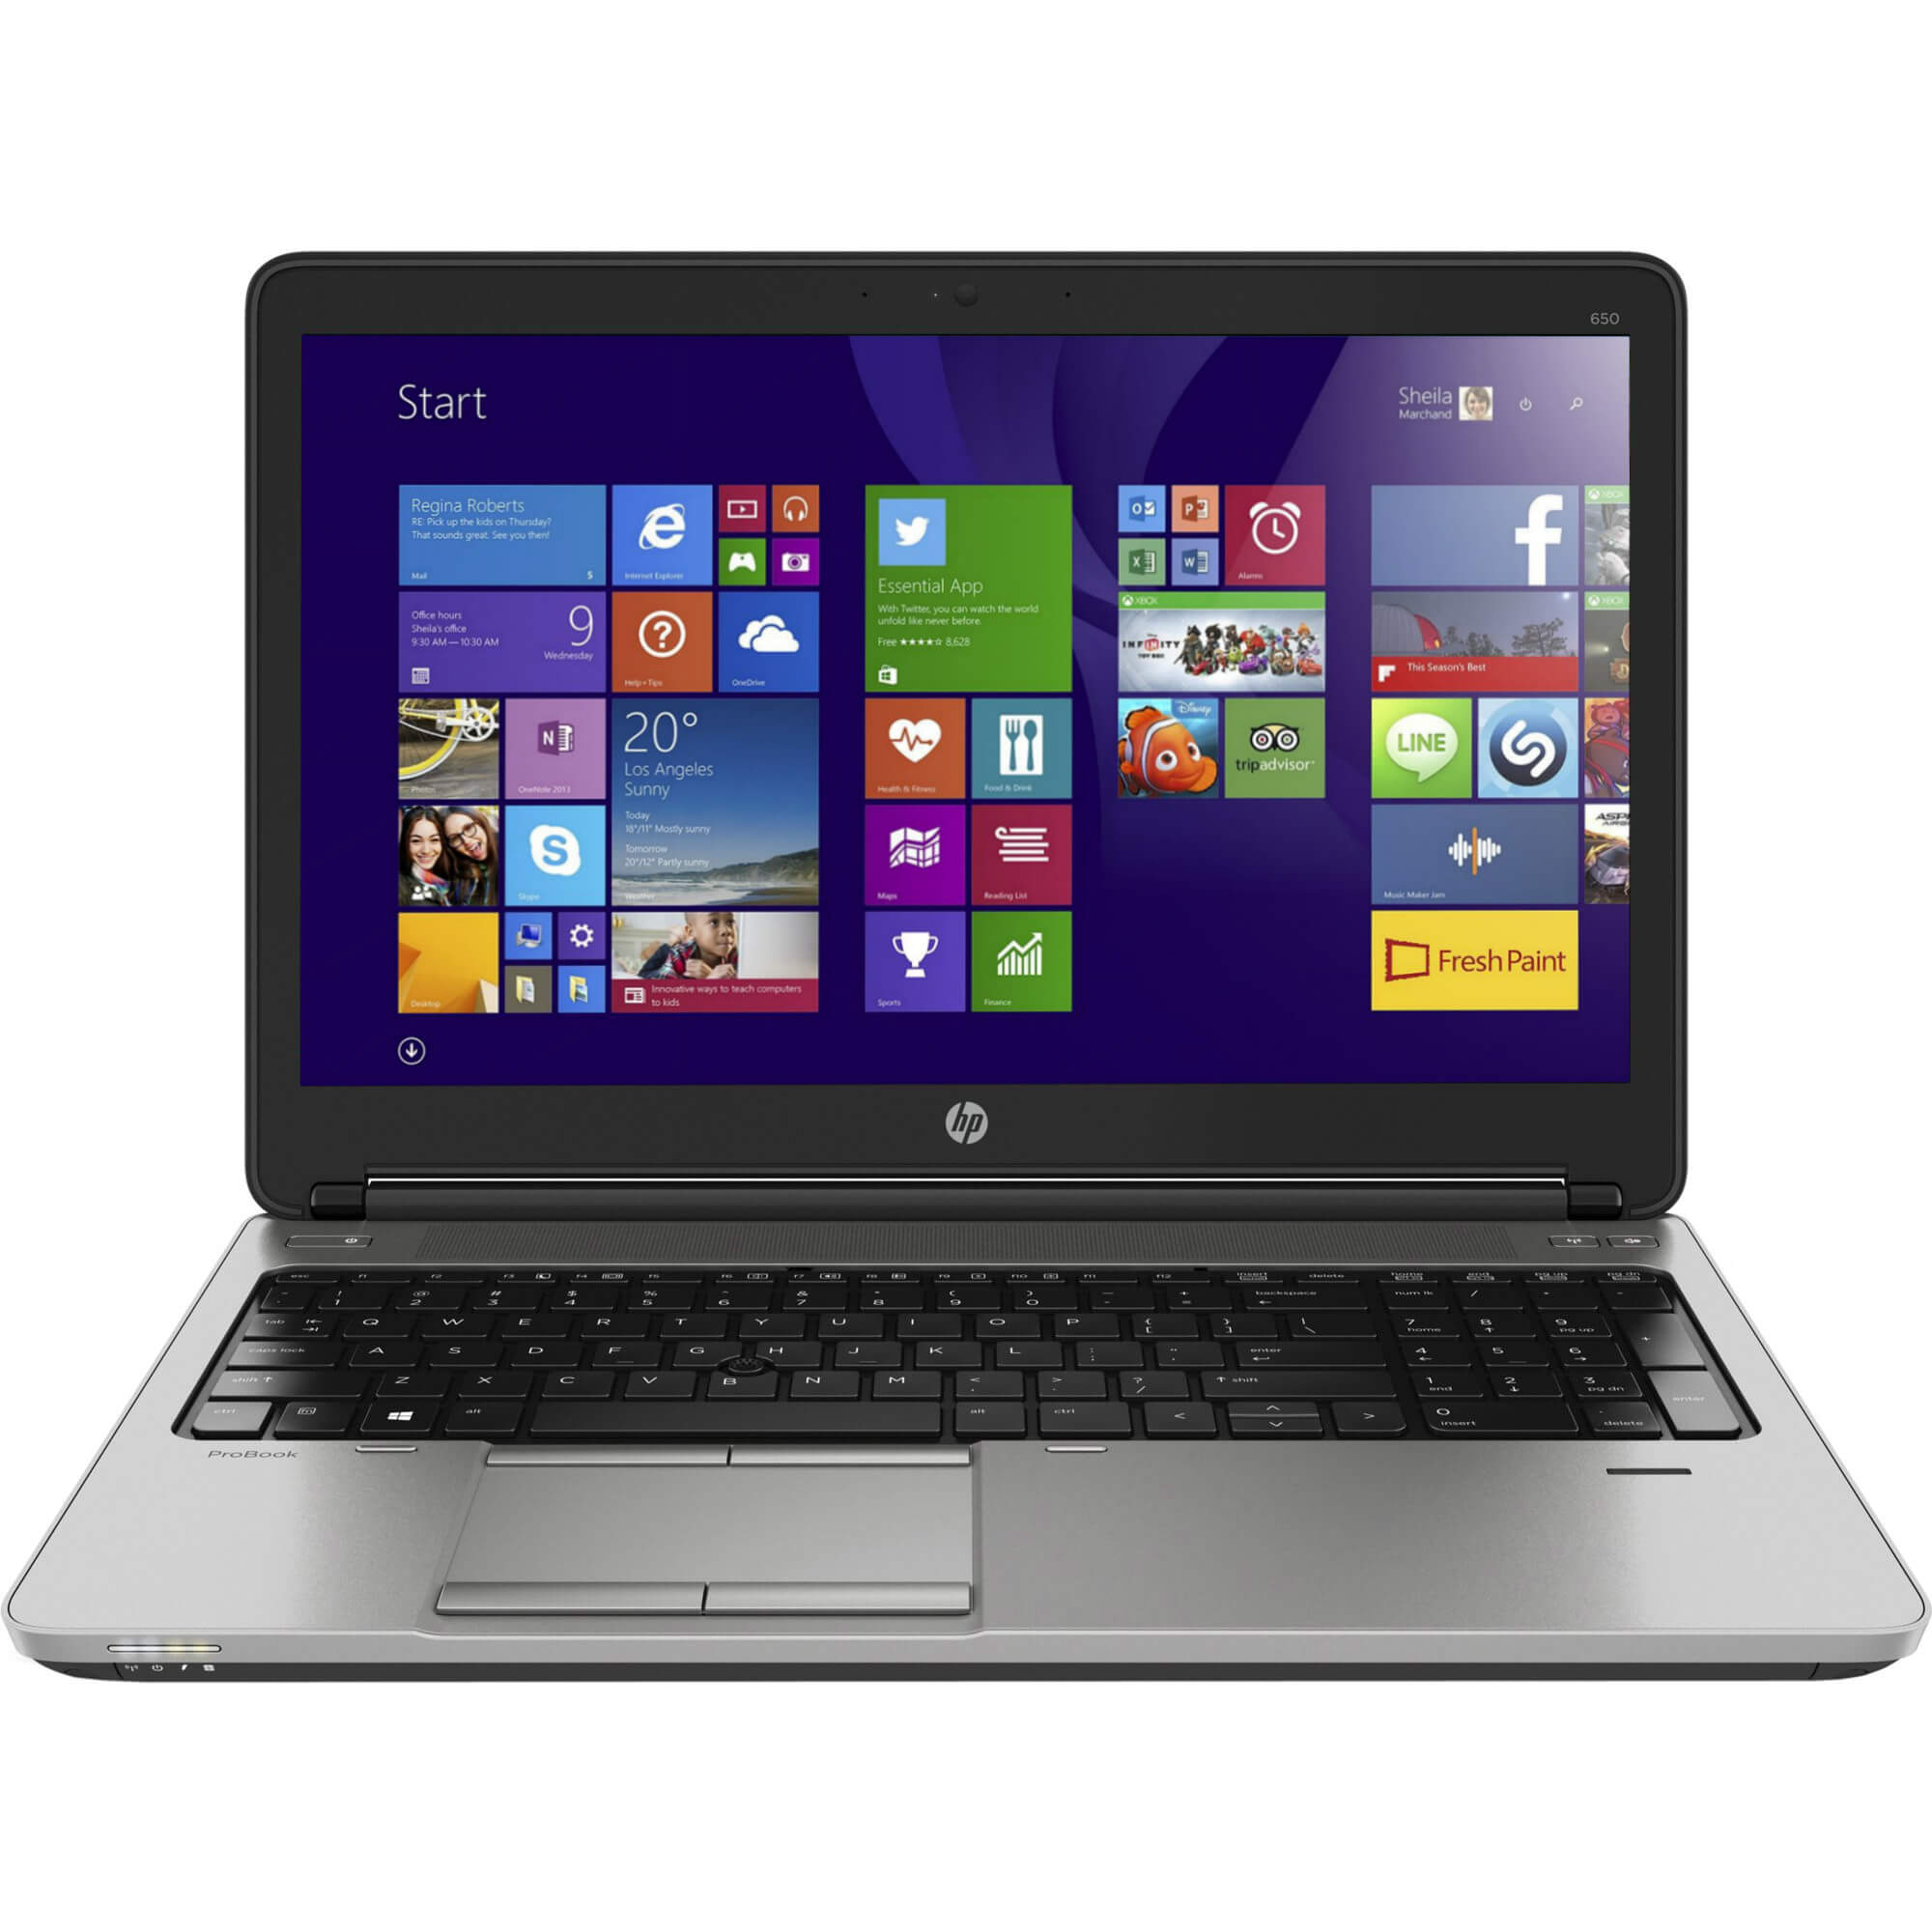 Laptop HP ProBook 650G1, Intel Core i3-4000M, 4GB DDR3, HDD 500GB, Intel HD Graphics, Windows 8